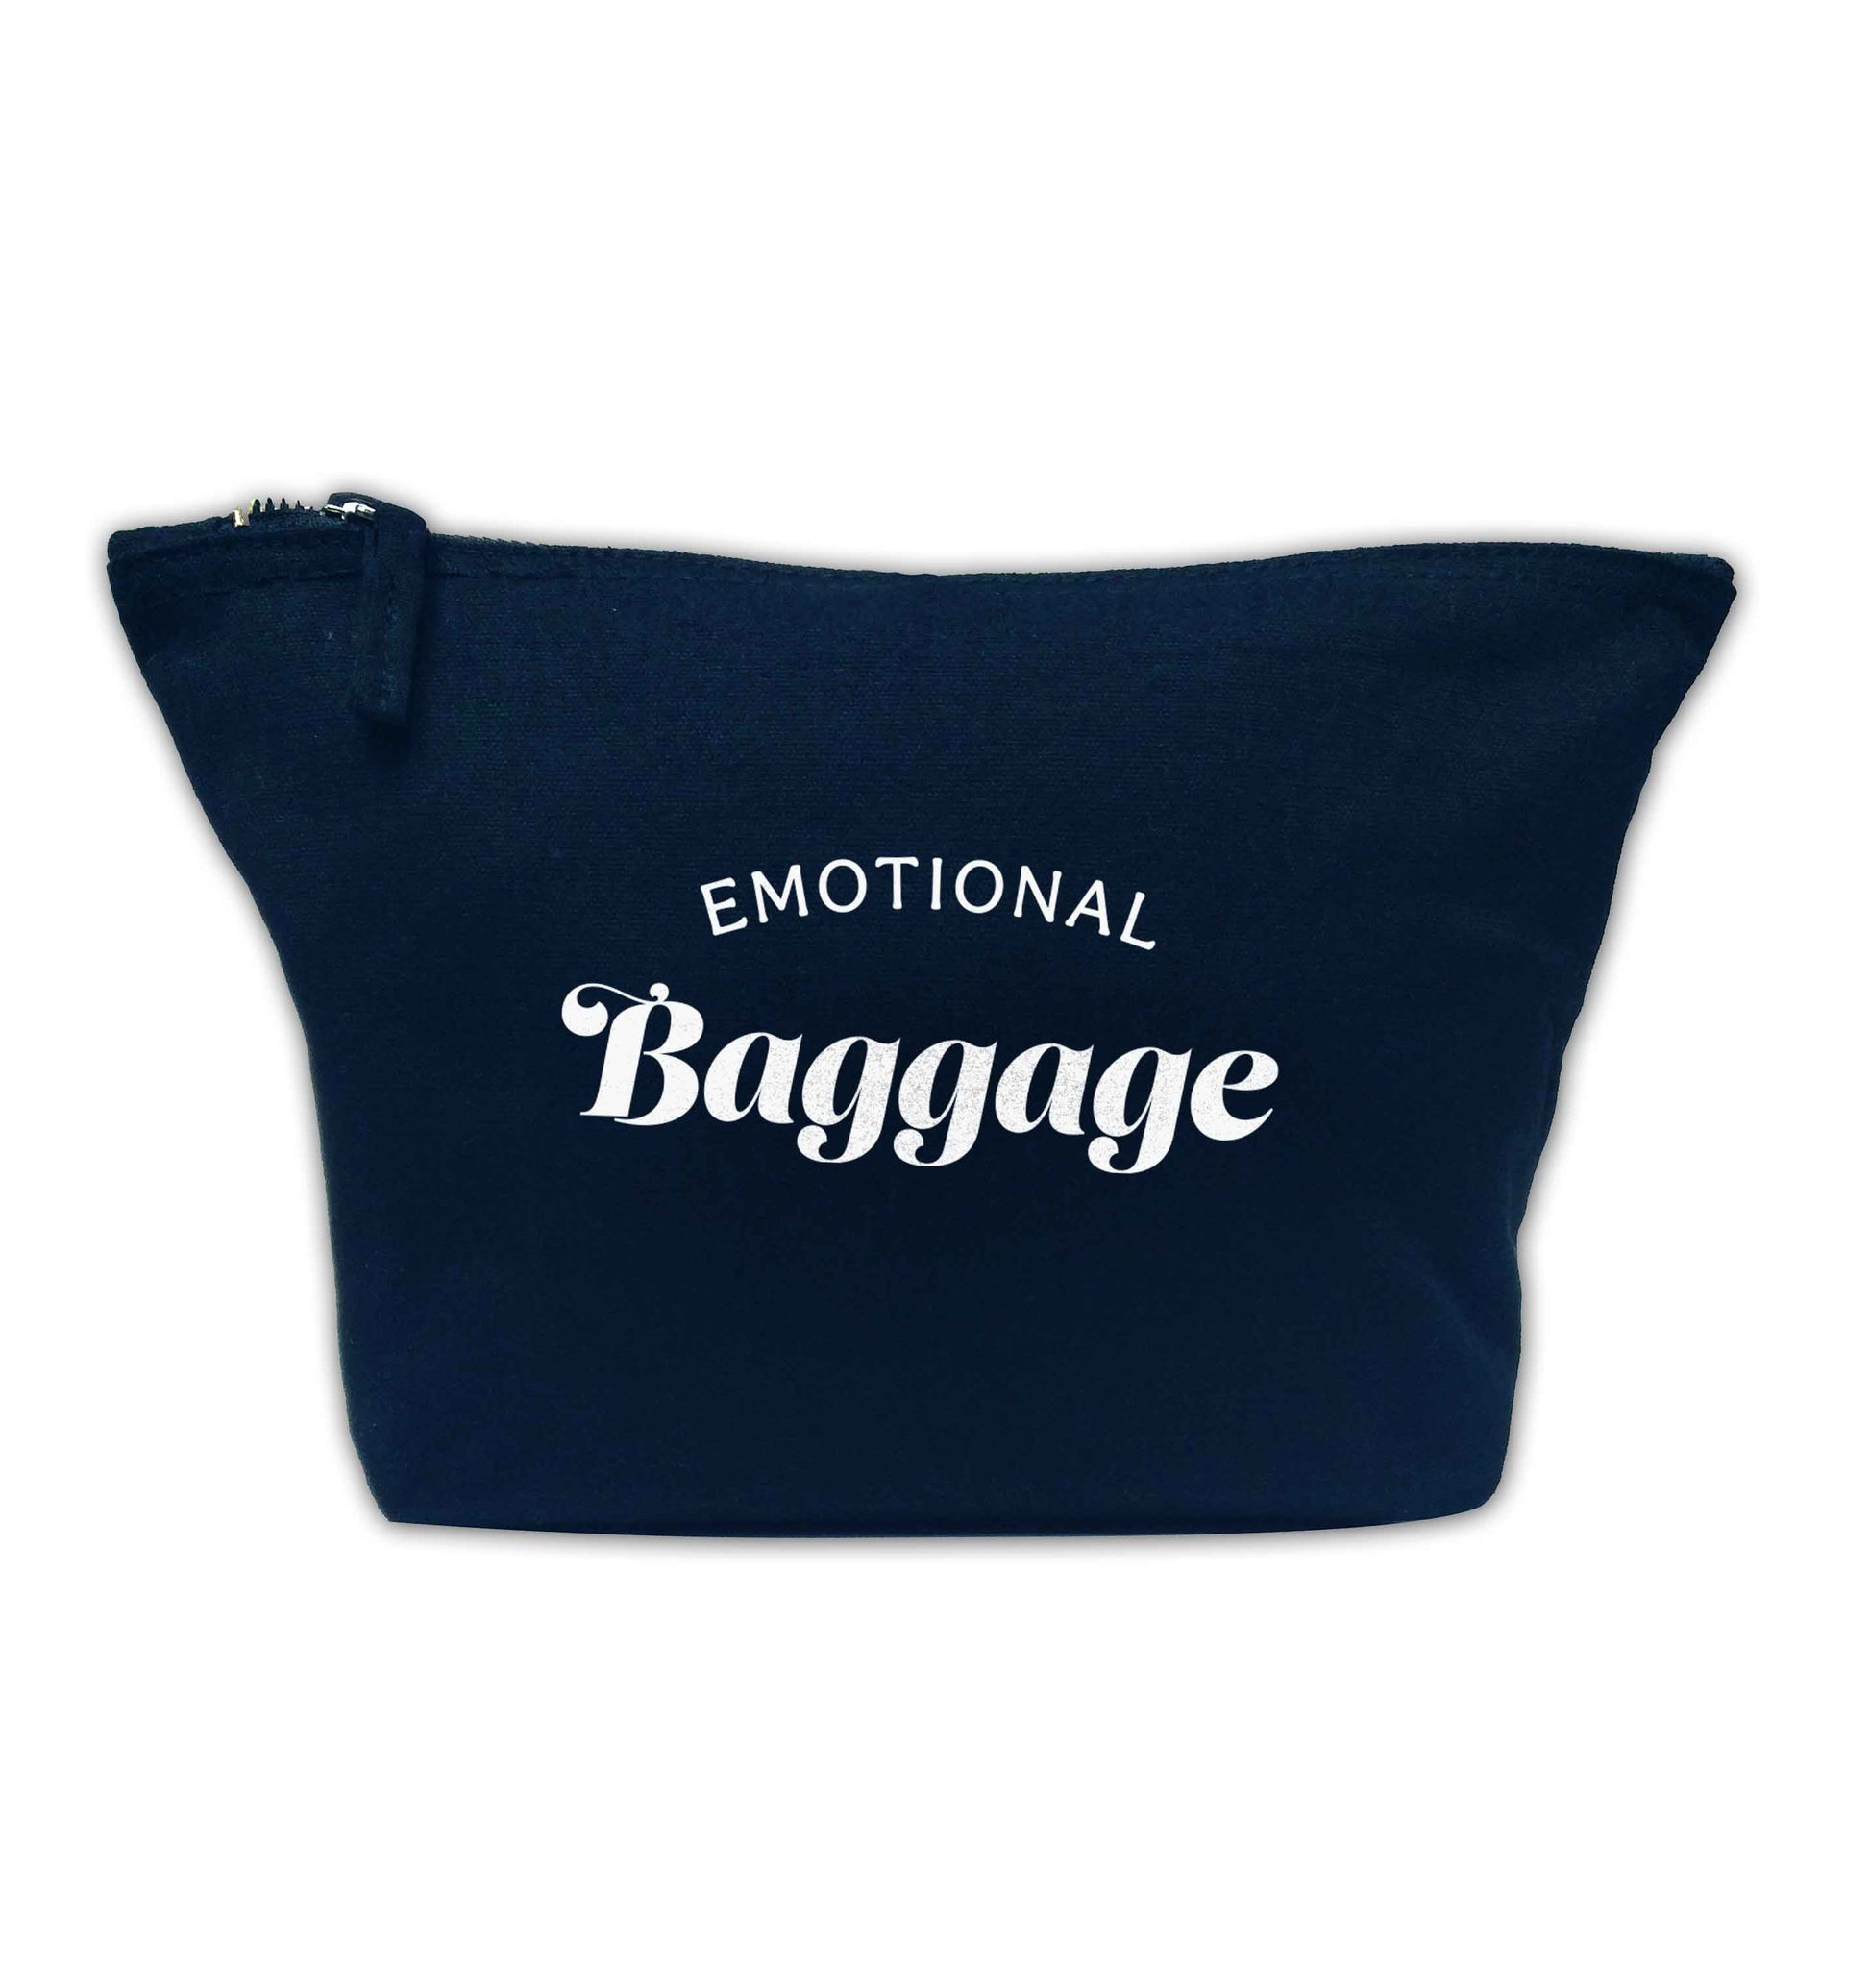 Emotional baggage navy makeup bag